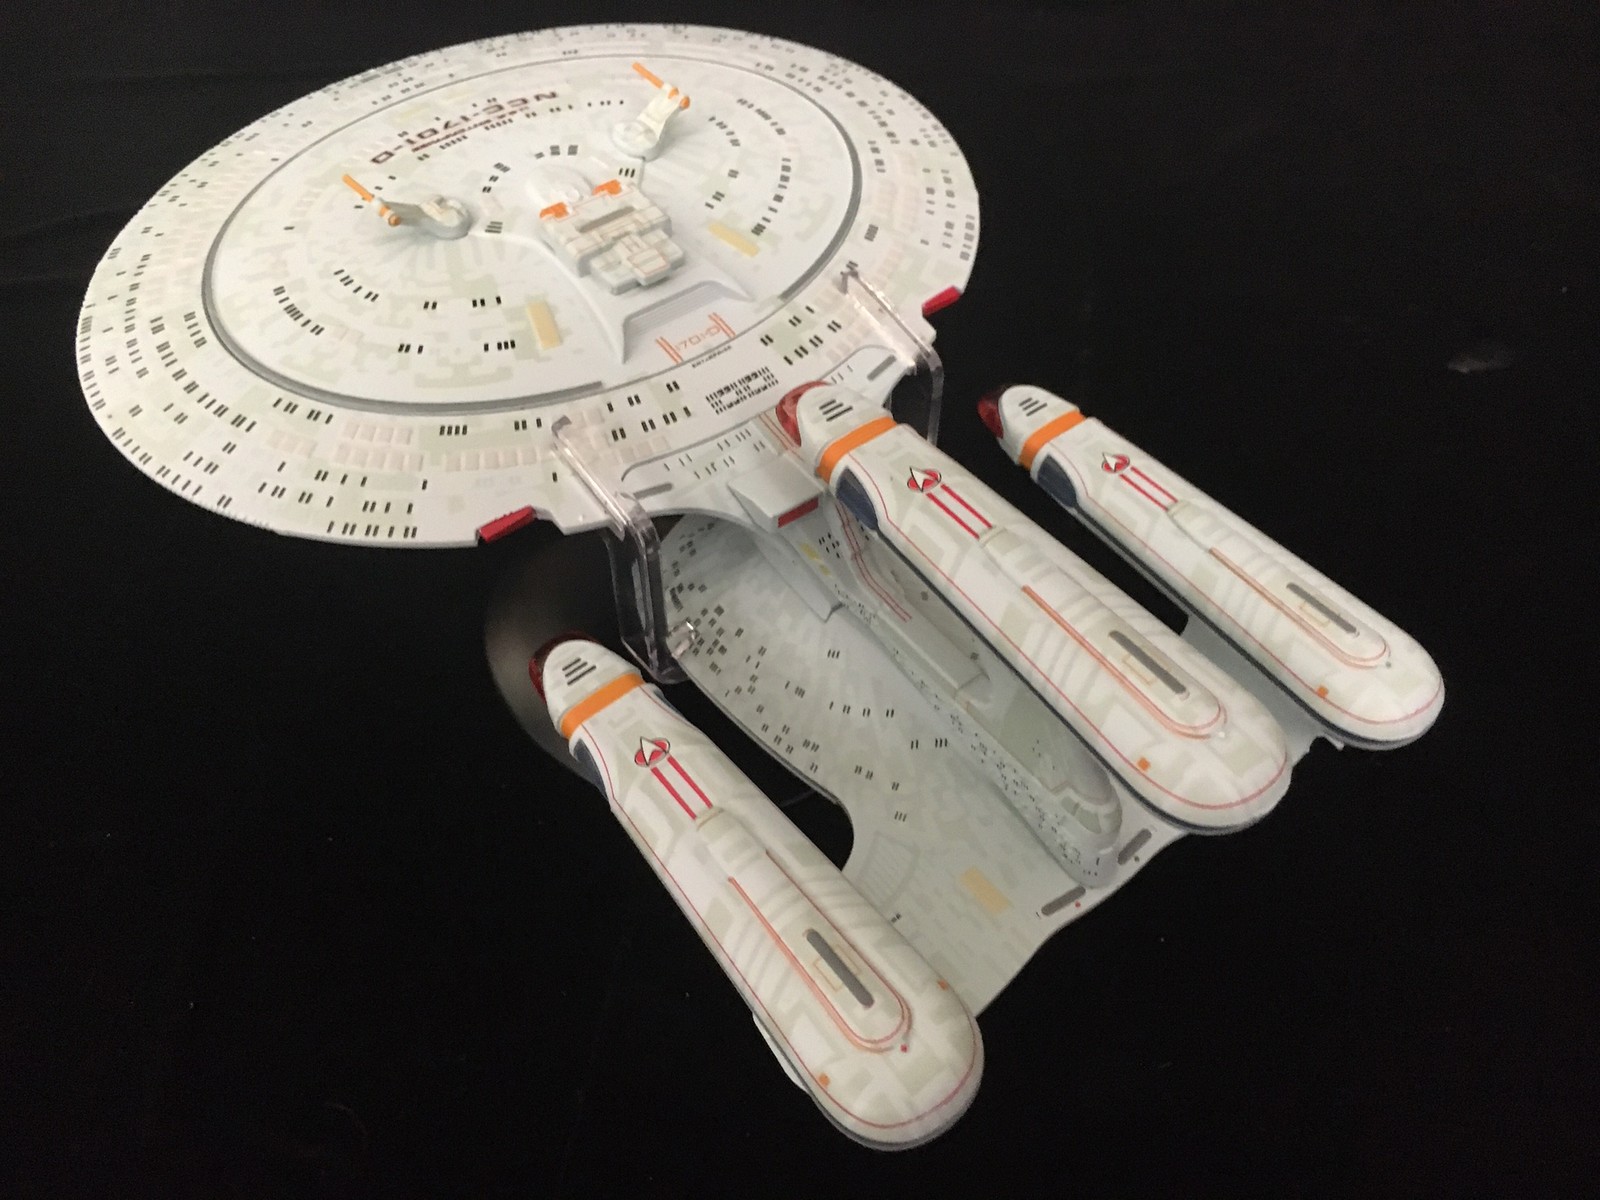 Enterprise NCC-1701-D Details about   Furuta Star Trek U.S.S Vol. 2 No. 6 TNG 